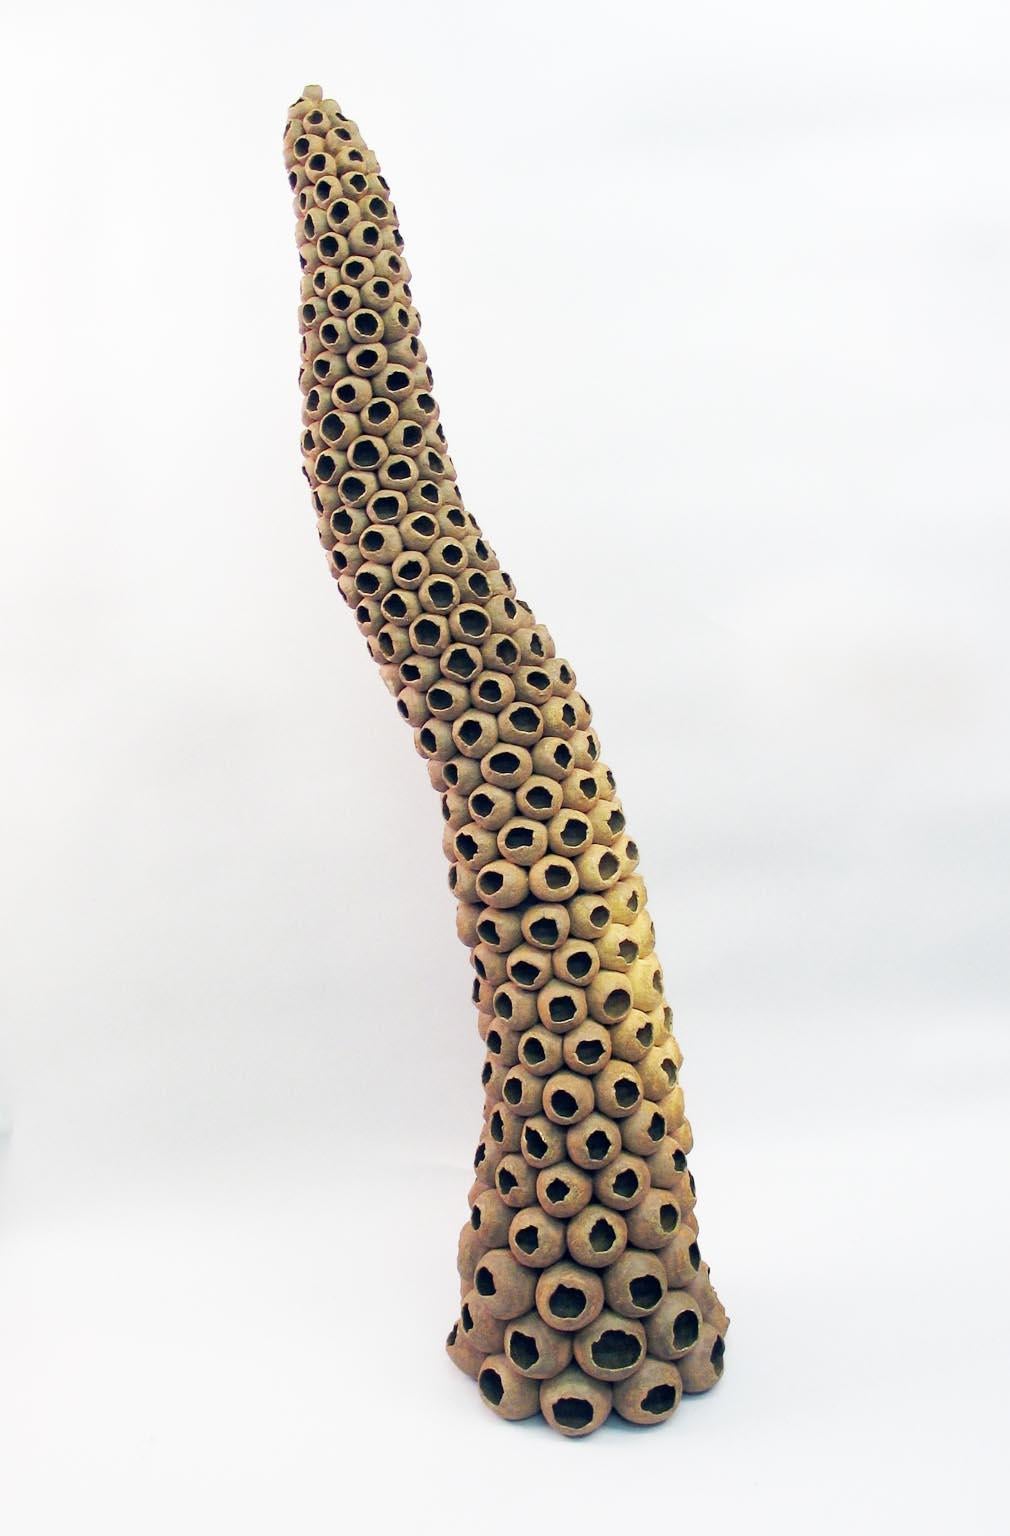 Elaine Lorenz Abstract Sculpture - “Depleted”, natural tan ceramic seedpods